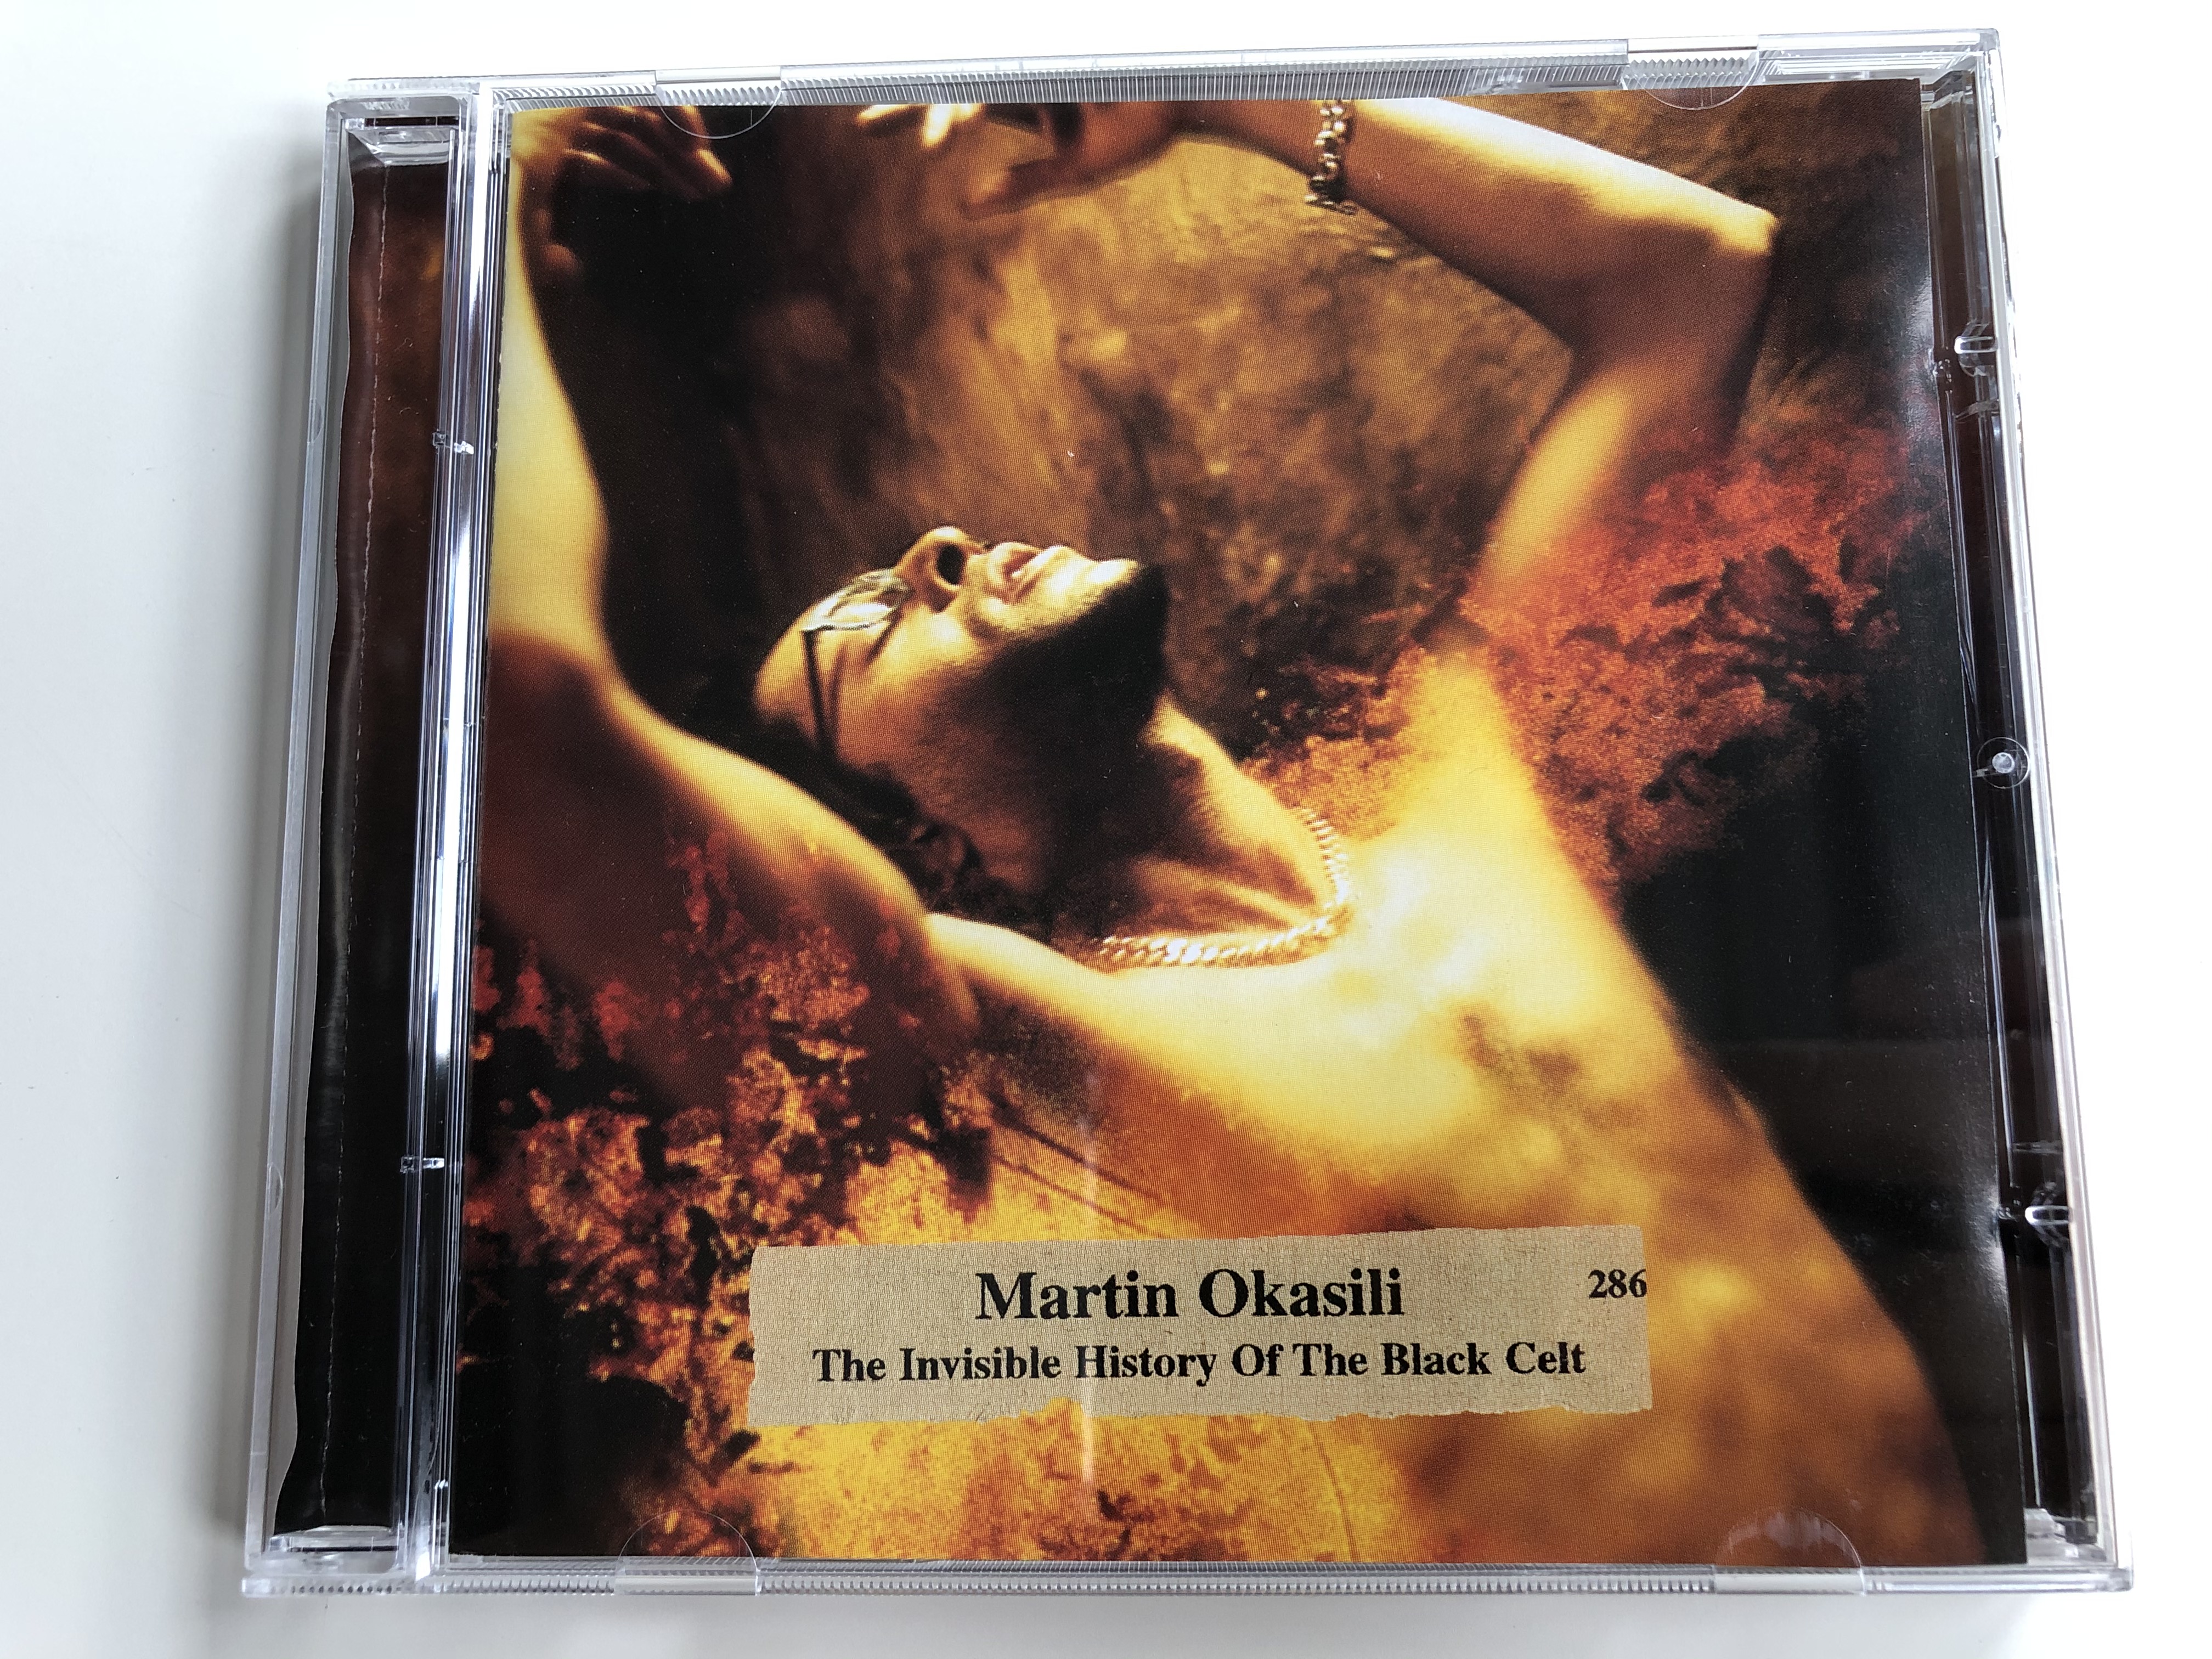 martin-okasili-the-invisible-history-of-the-black-celt-wea-audio-cd-1997-0630-14131-2-1-.jpg